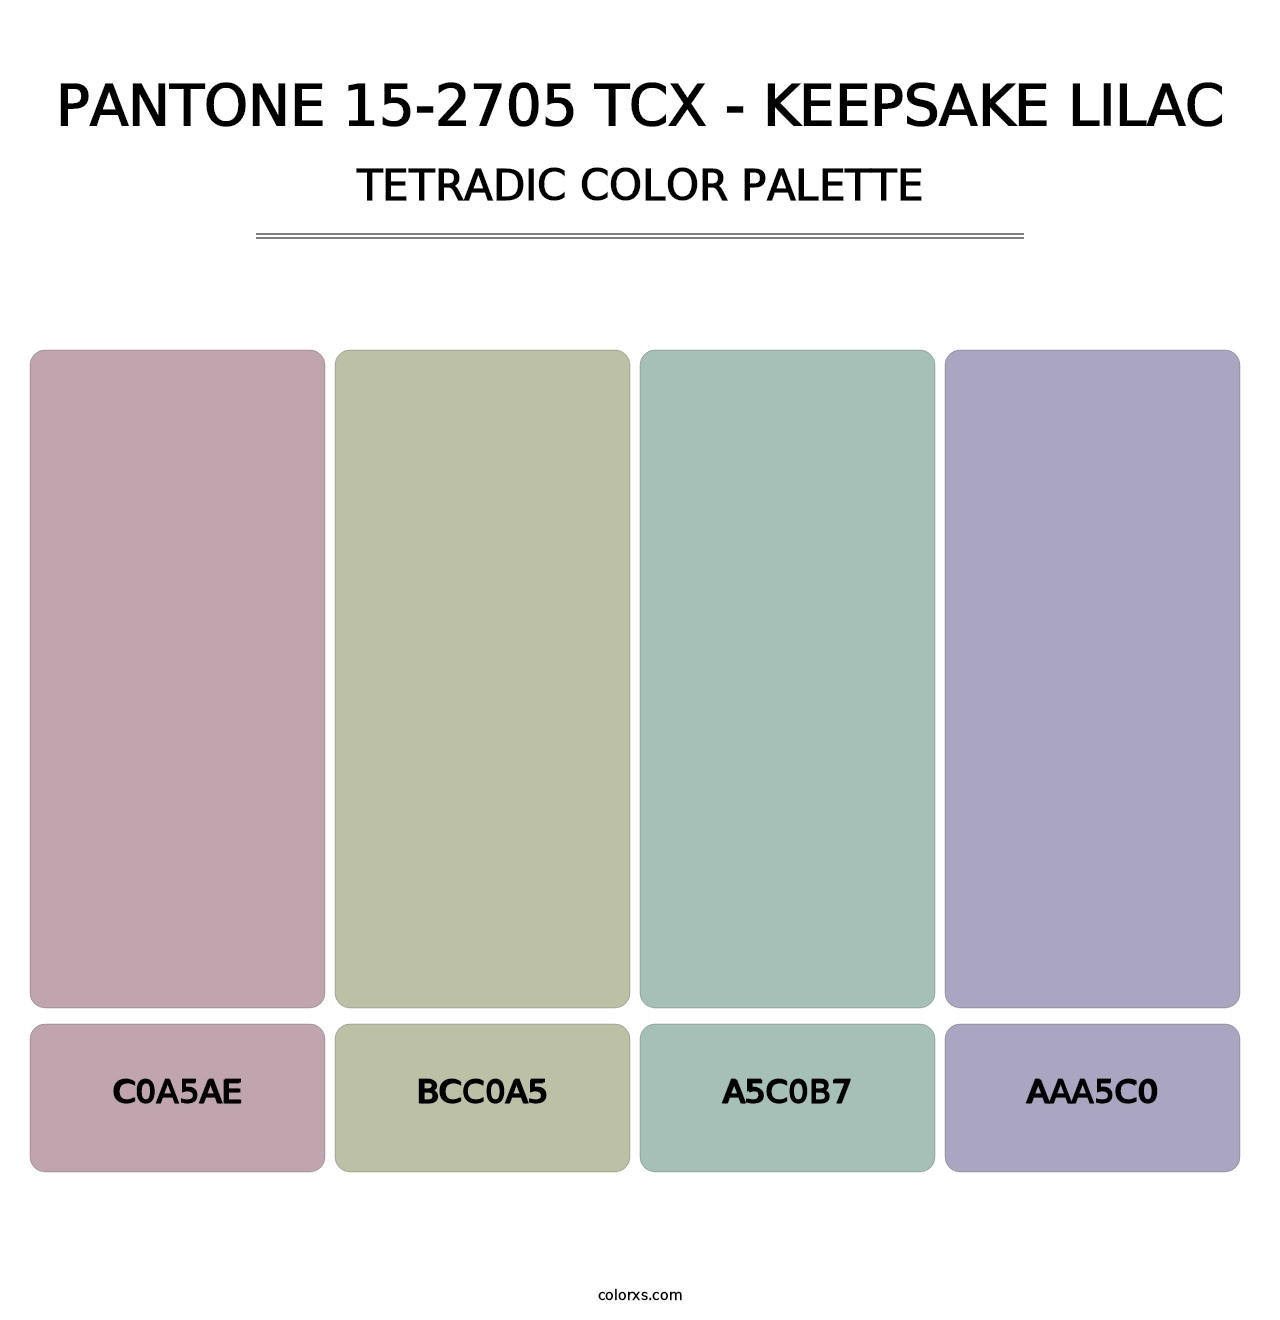 PANTONE 15-2705 TCX - Keepsake Lilac - Tetradic Color Palette